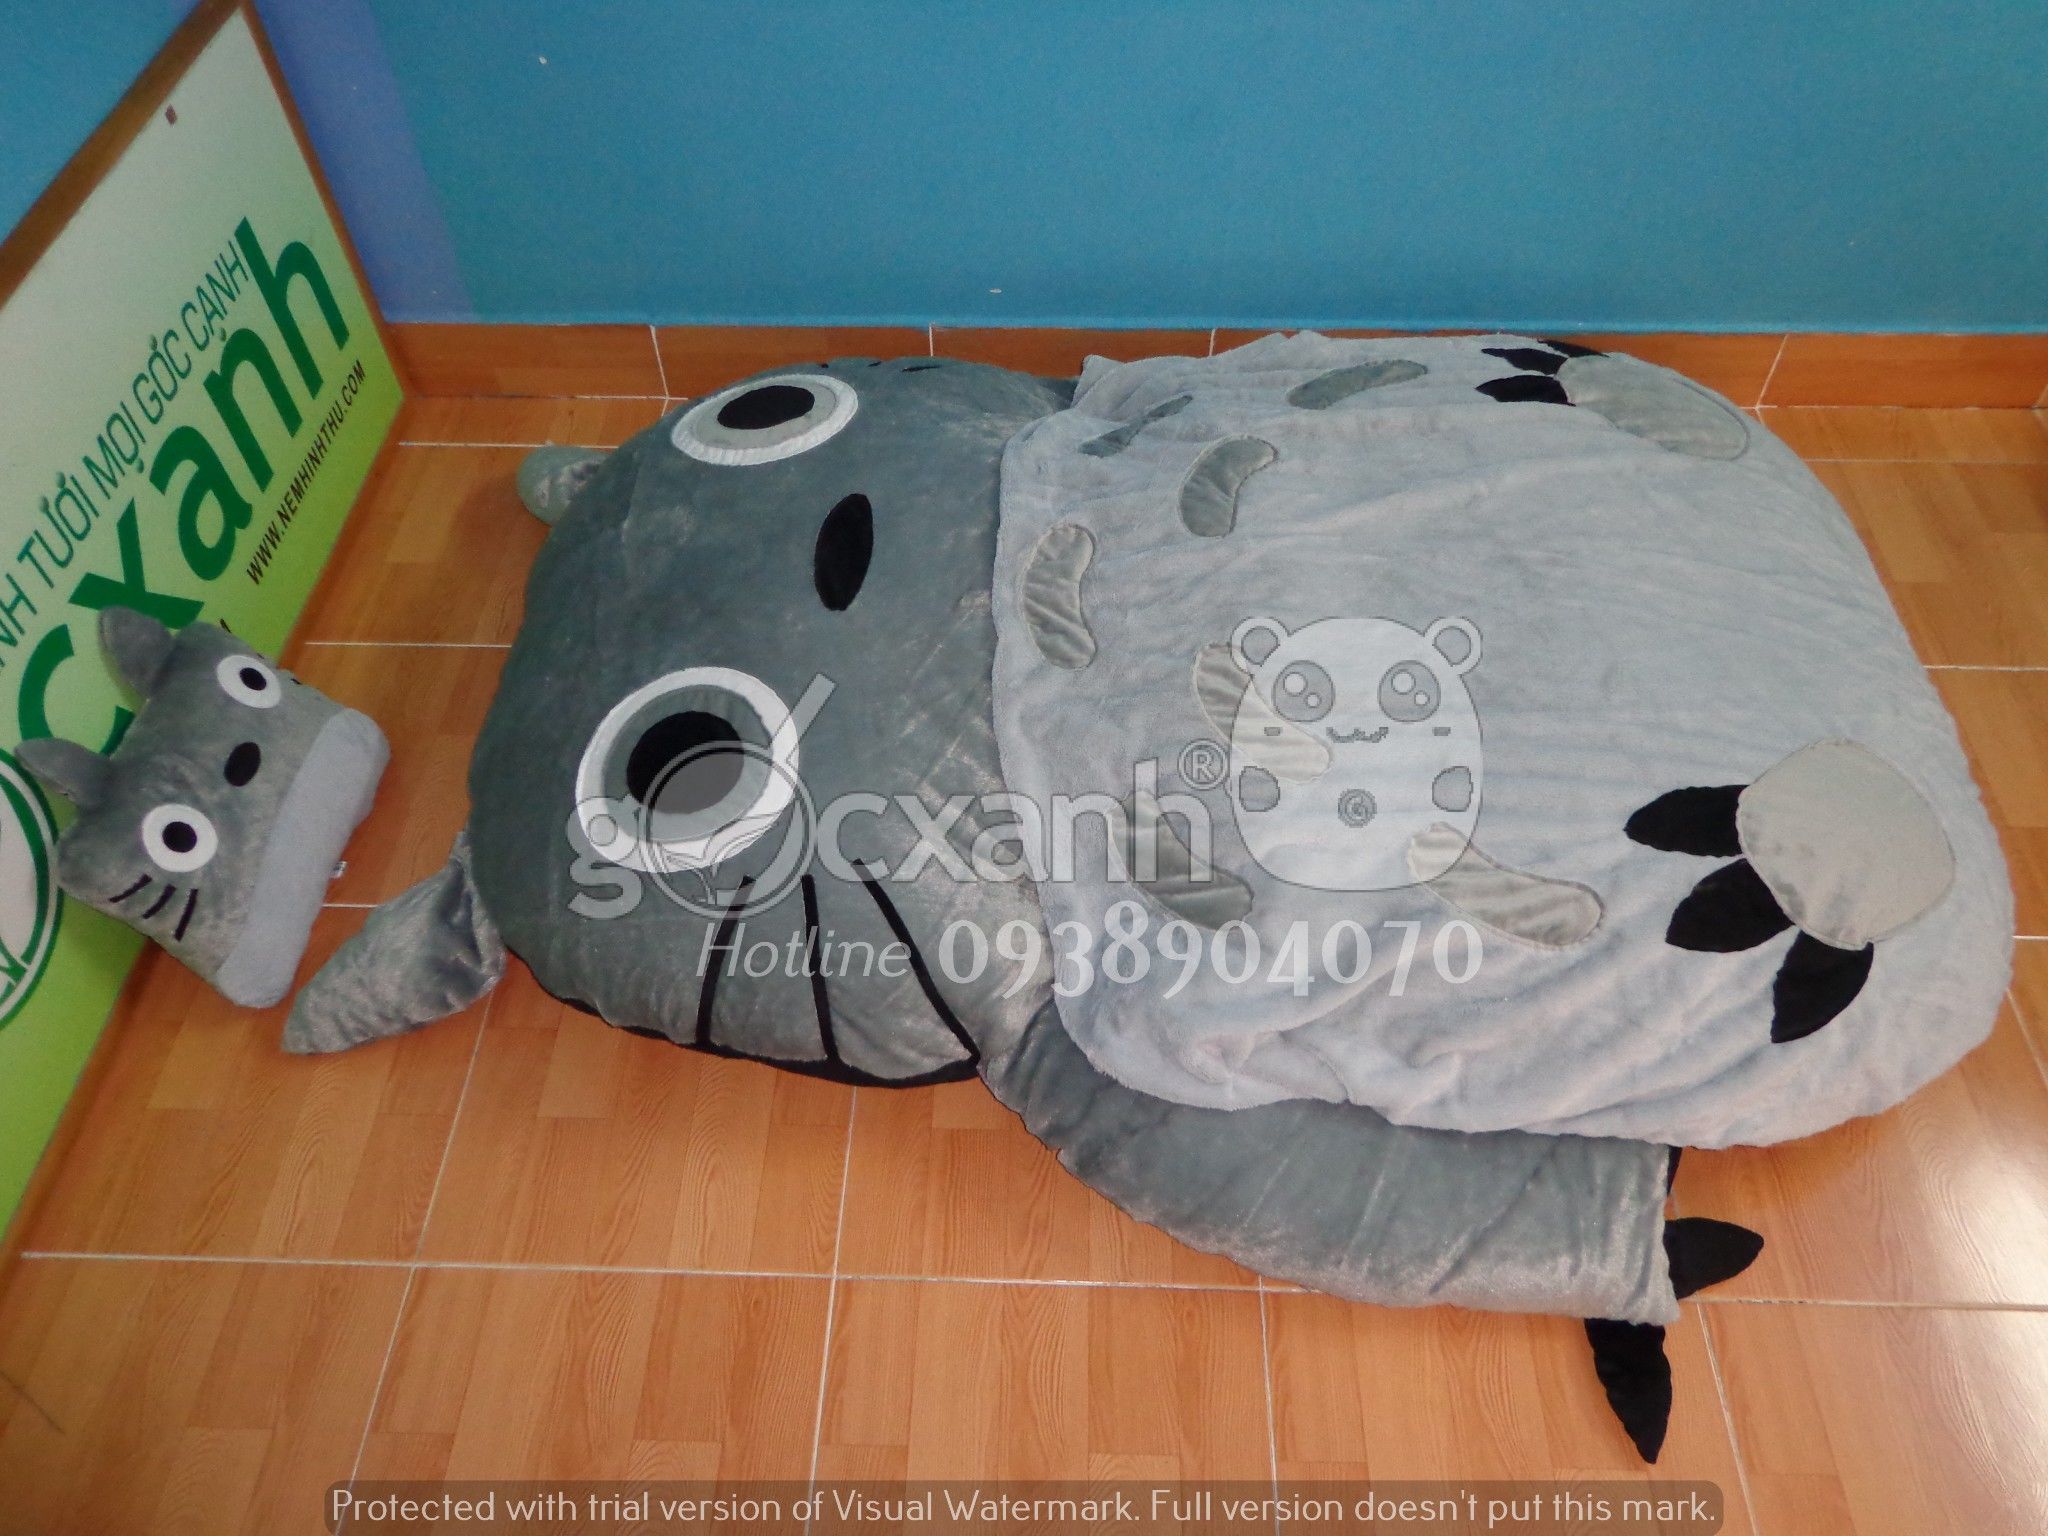 Nệm Totoro ốm dài (1.2 x 1.8m)